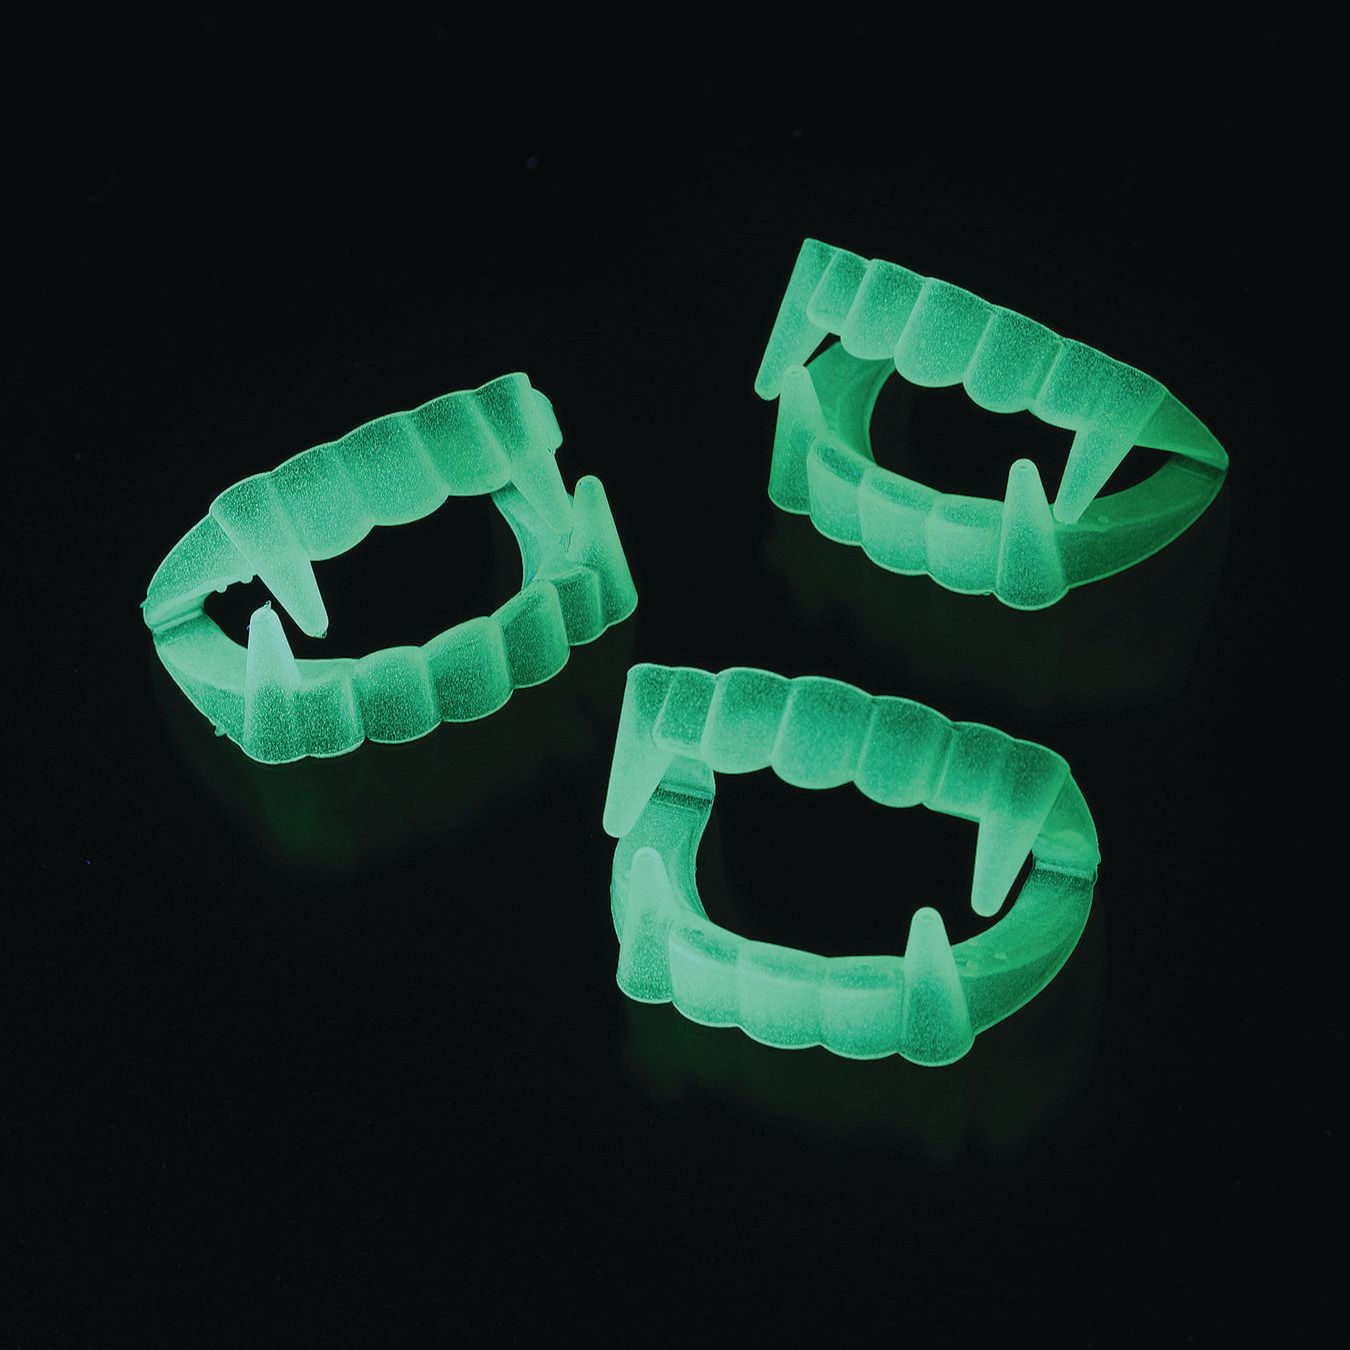 Neon Vampire Teeth - 144 Ct.